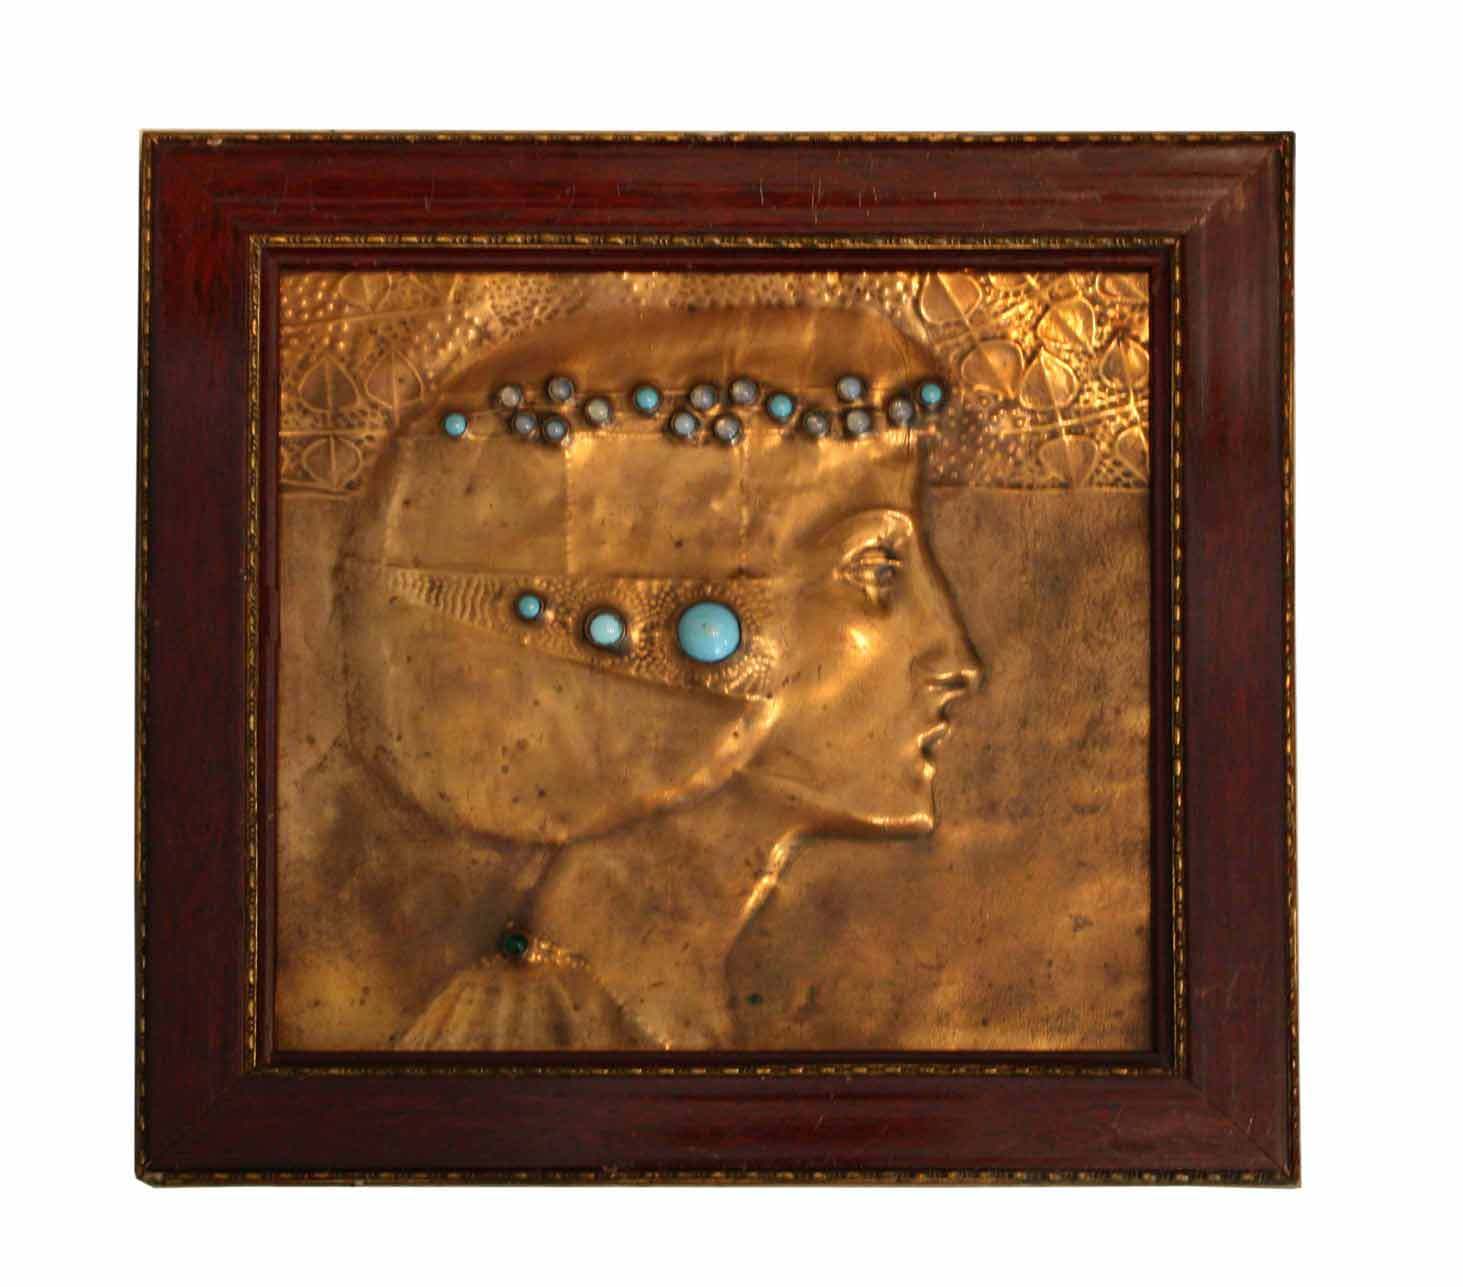 "Maiden's Head in Profile" by Georg Klimt